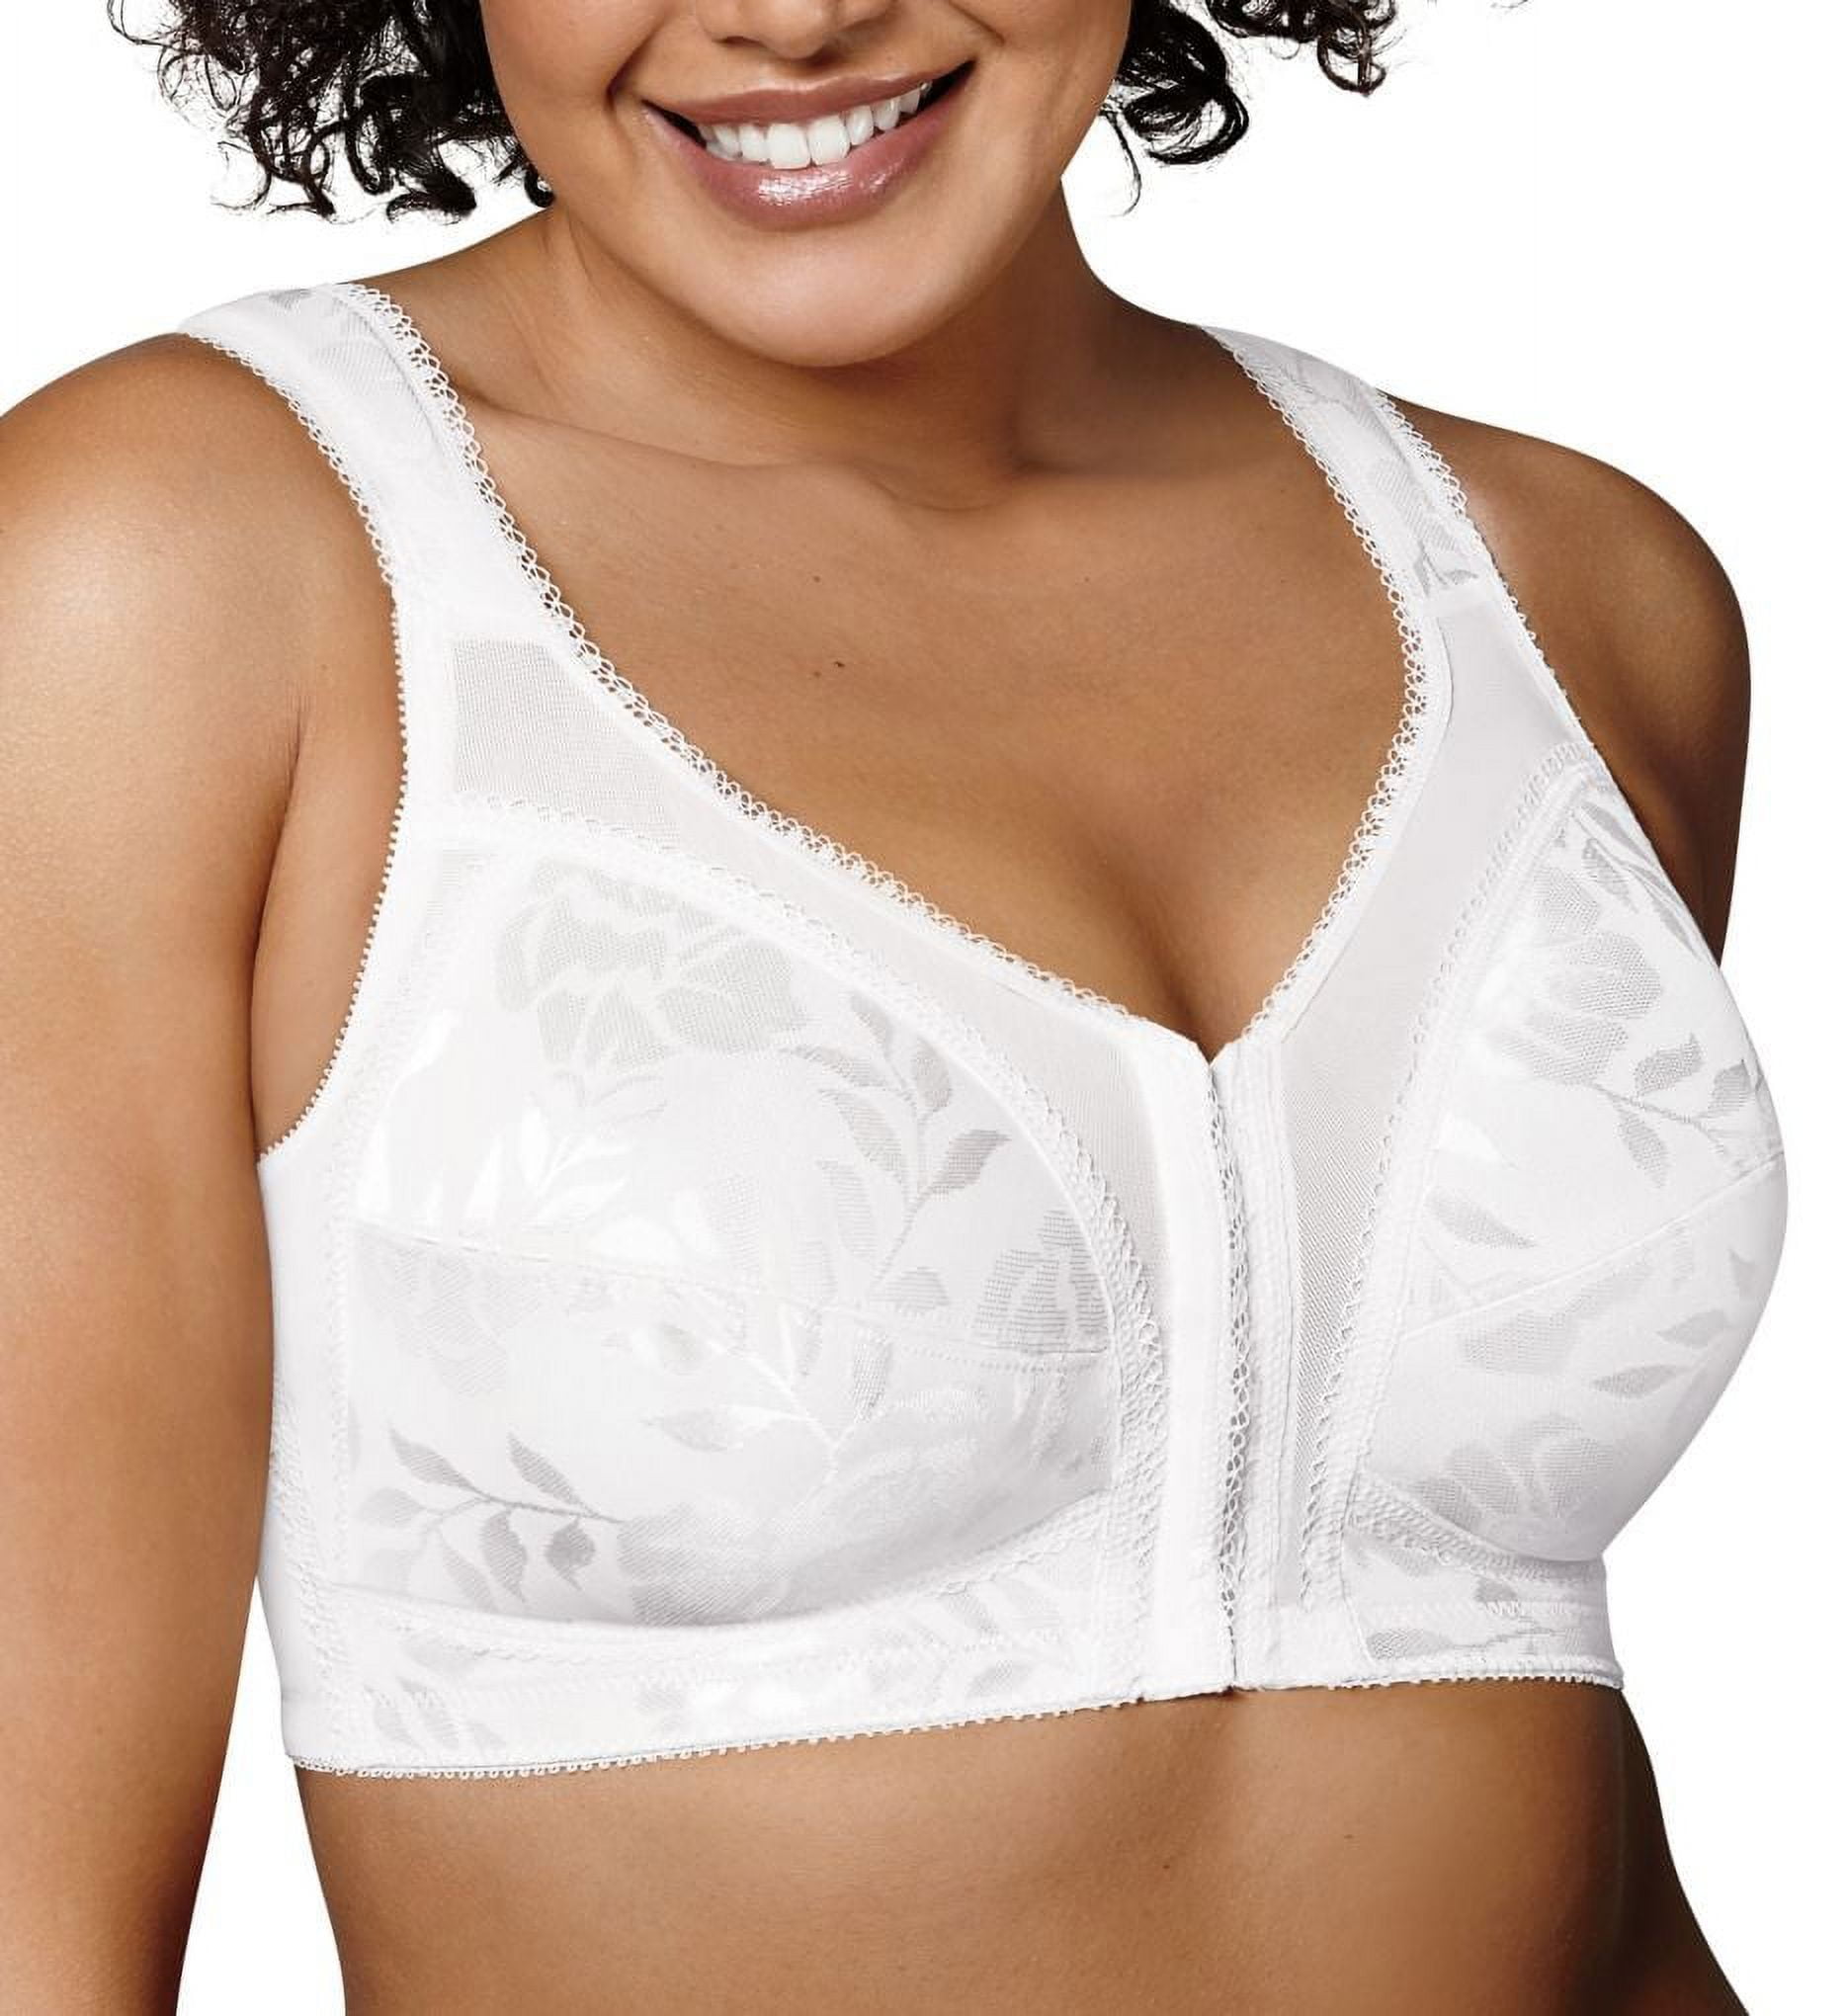 Women's Full Figure Cotton Plus Size Seamless Wirefree Back Close Sports Bra  - 42DDD, White 